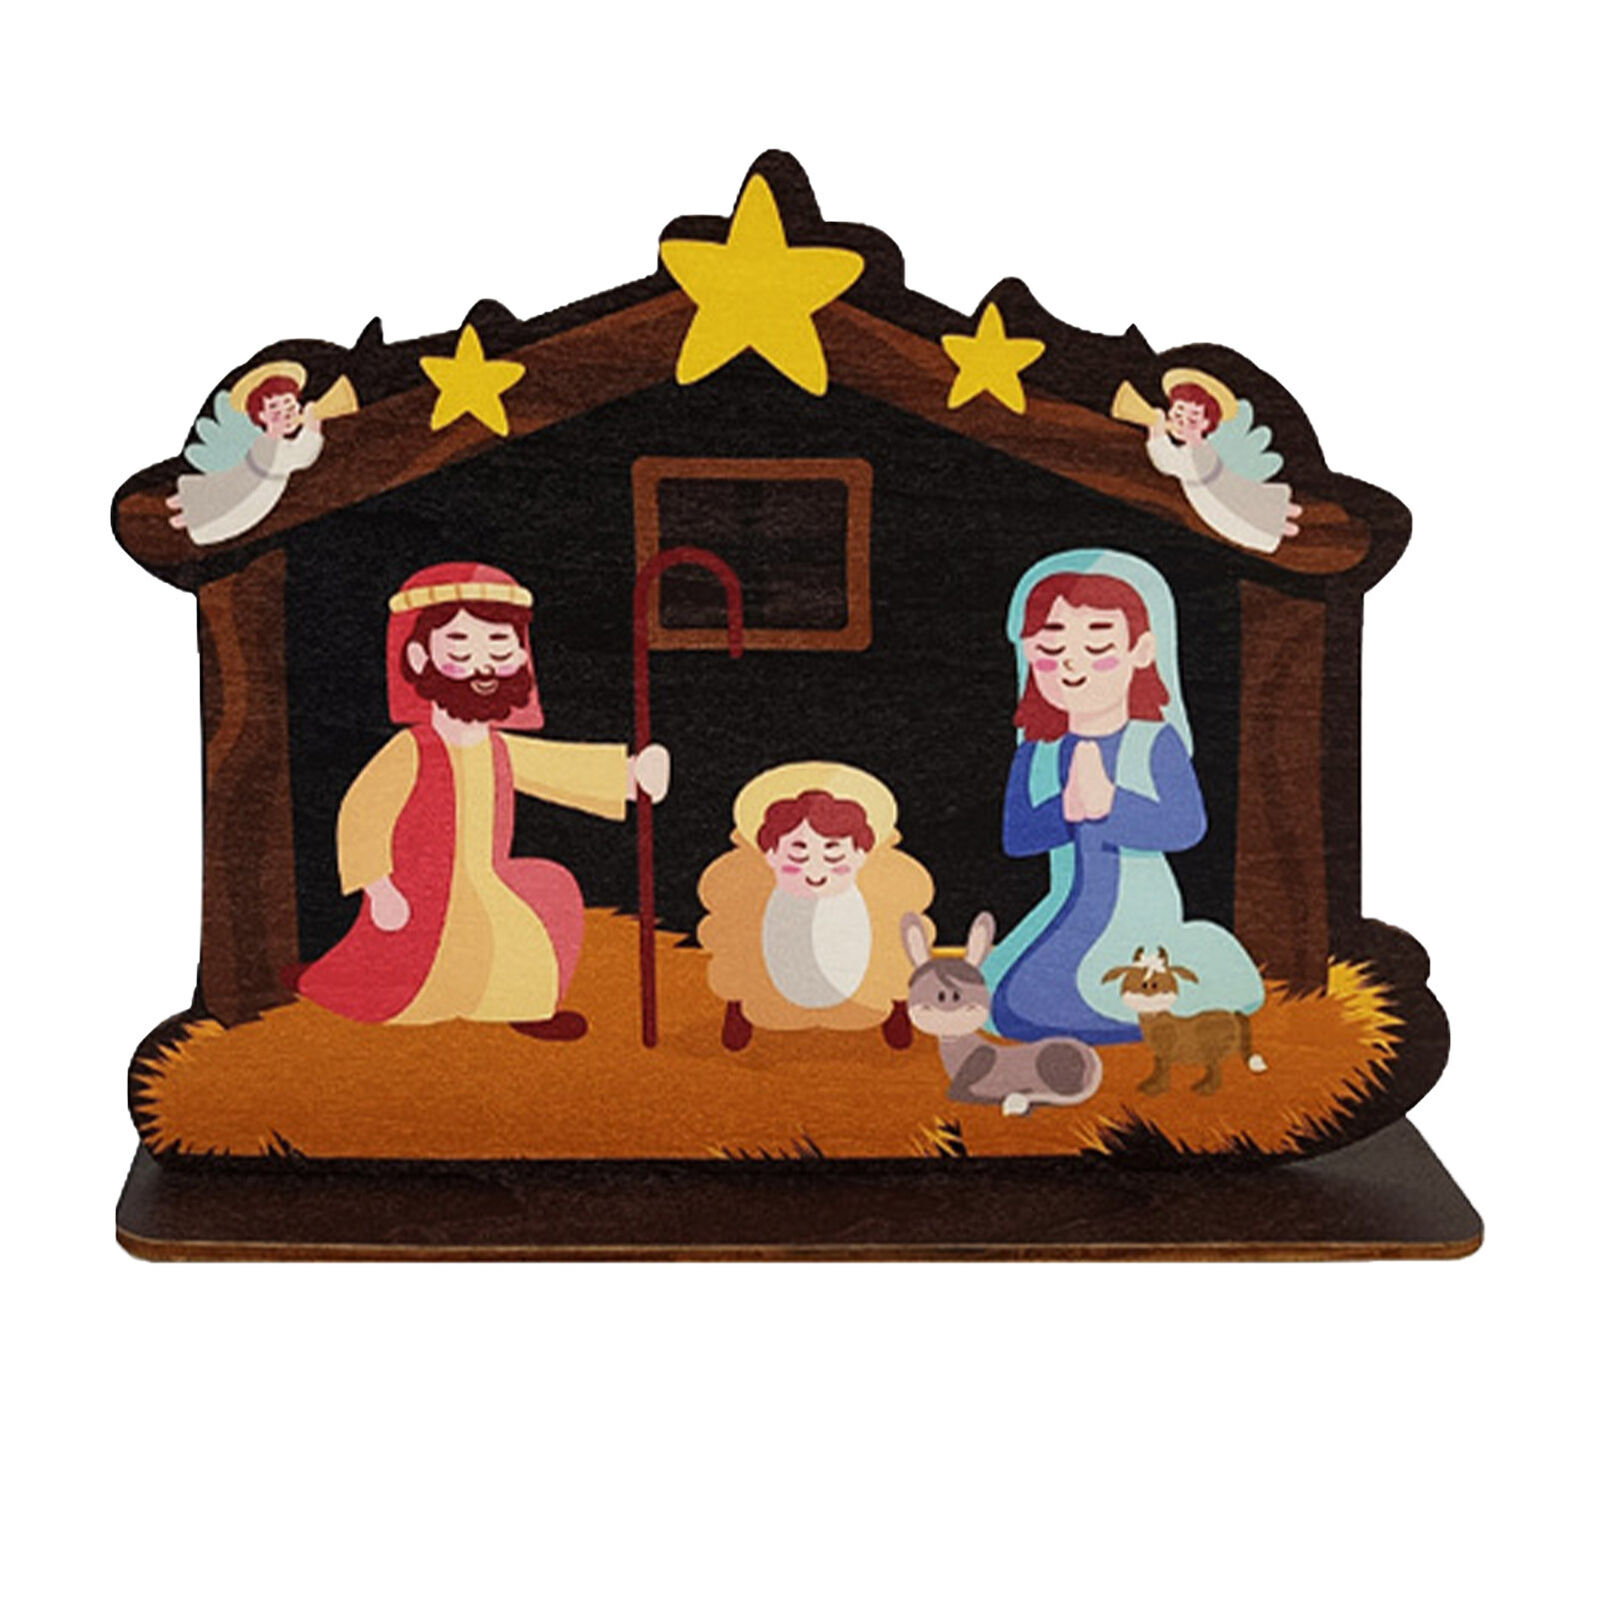 Wooden Nativity Set Indoor Wooden Nativity Figures Christmas Ornament Religious 